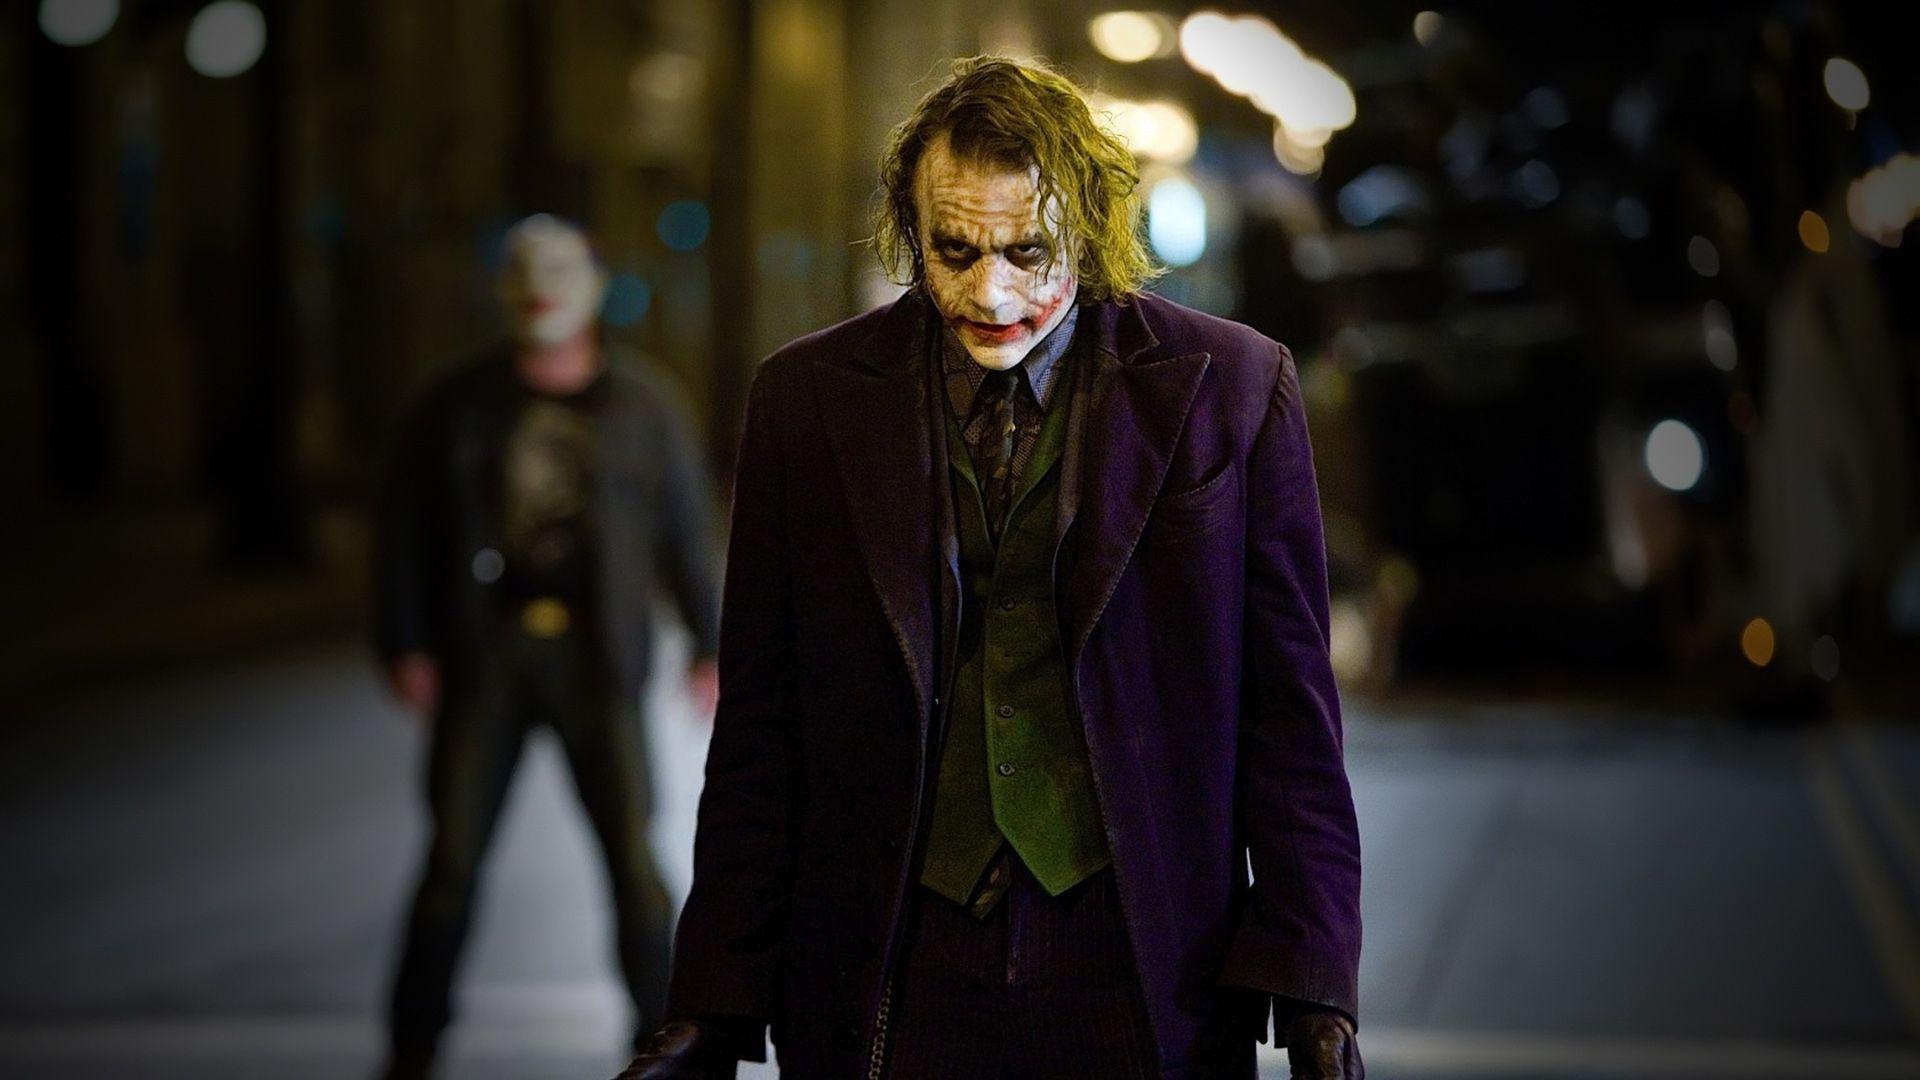 Heath Ledger Joker Wallpaper, Image, Picture, Photos, HD Wallpaper